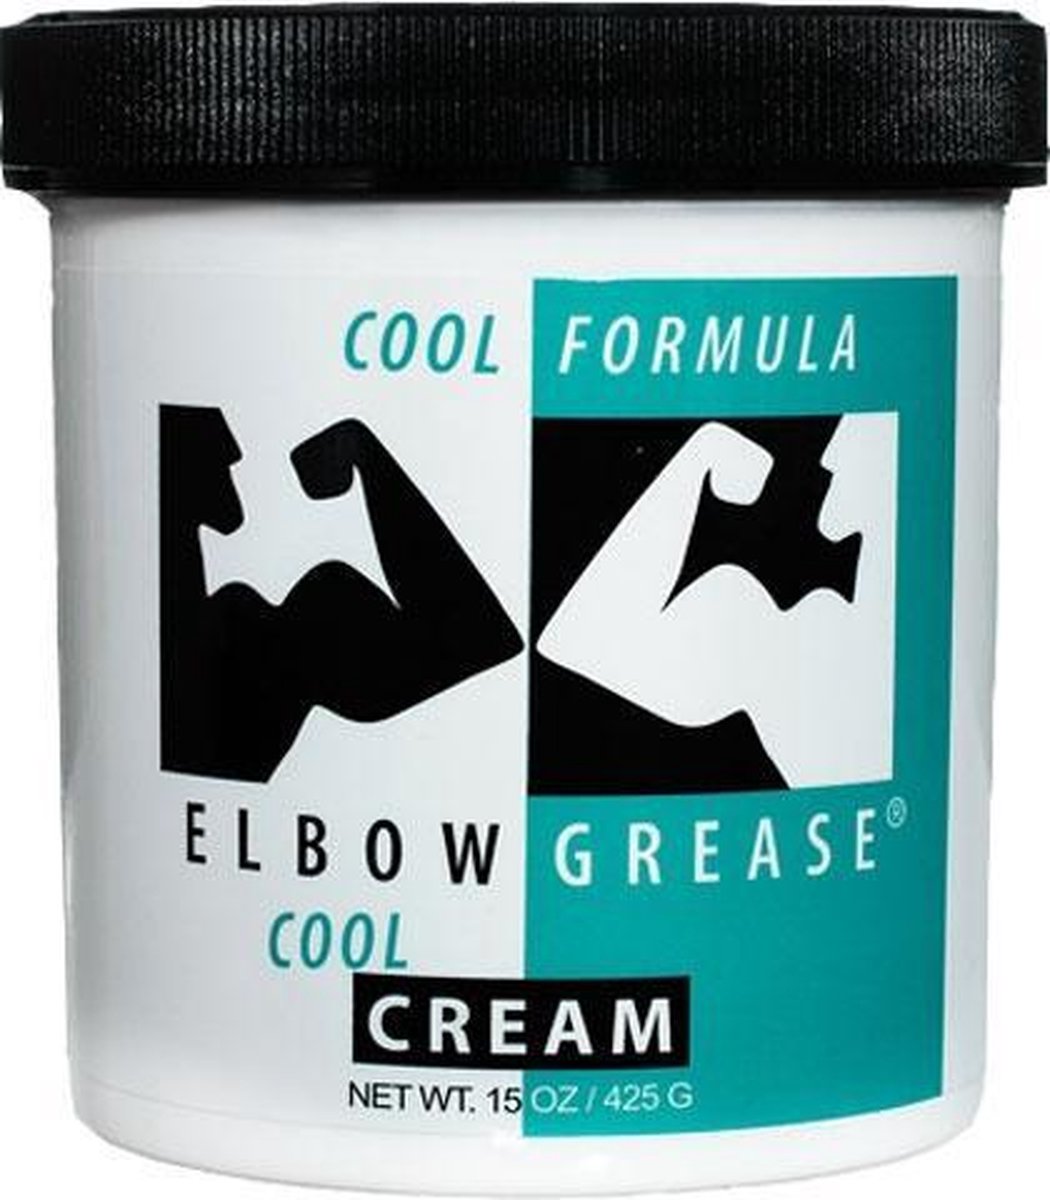 Elbow grease cool 15 oz / 425 gram